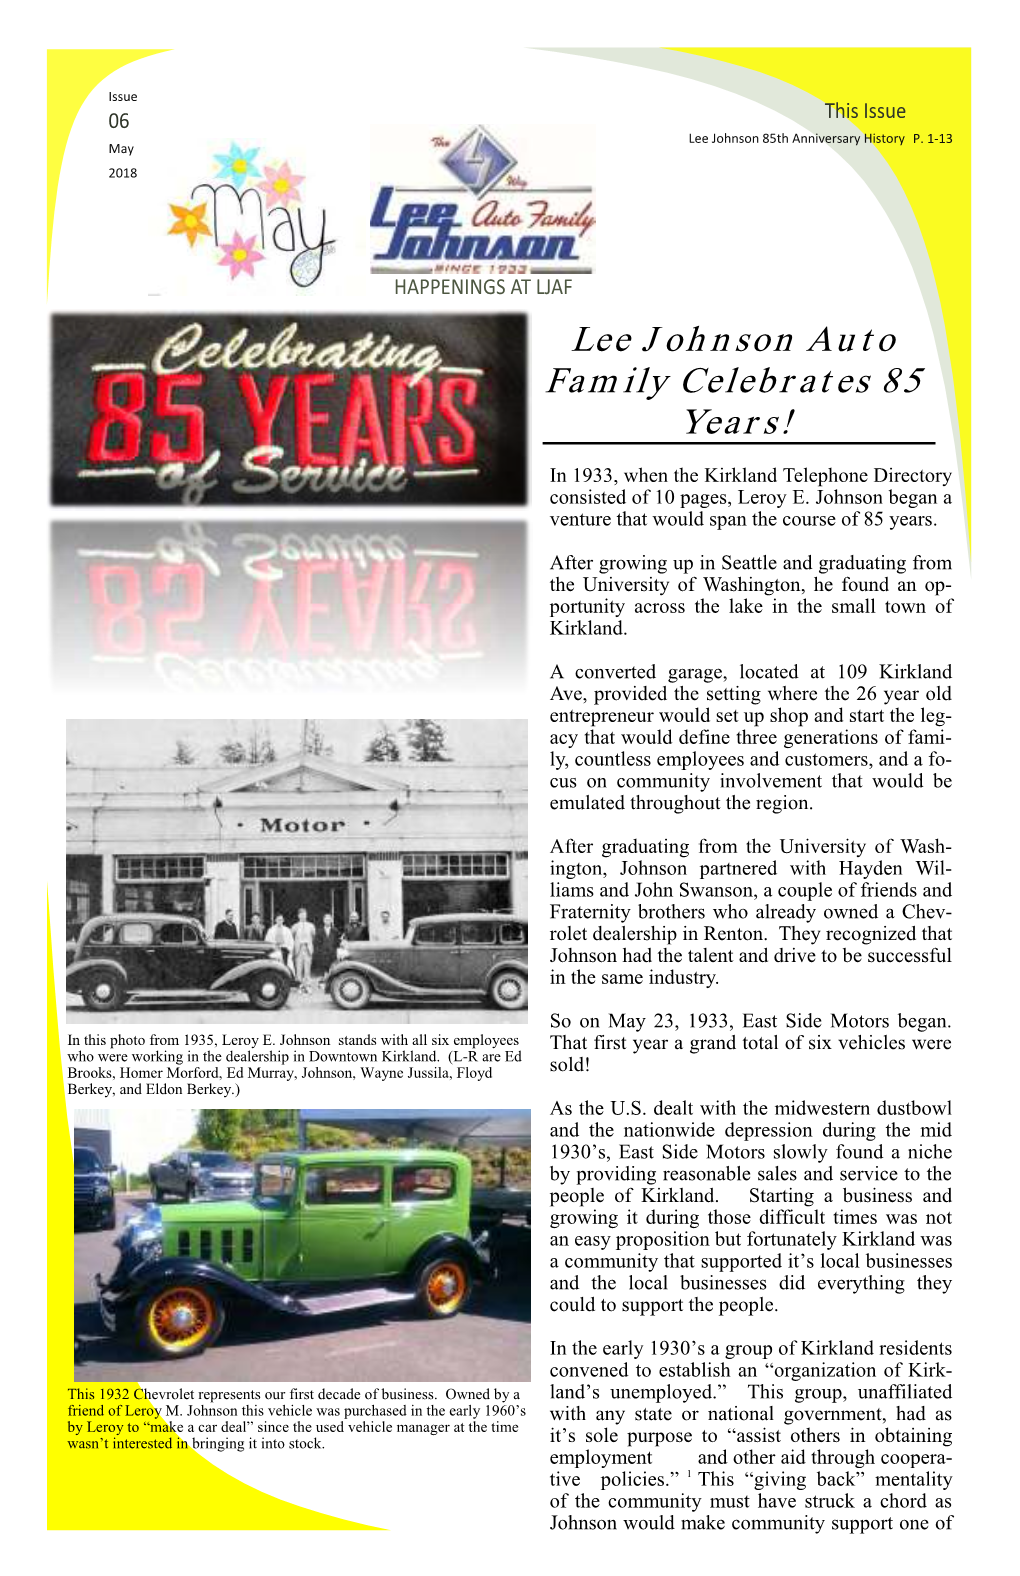 Lee Johnson Auto Family Celebrates 85 Years!